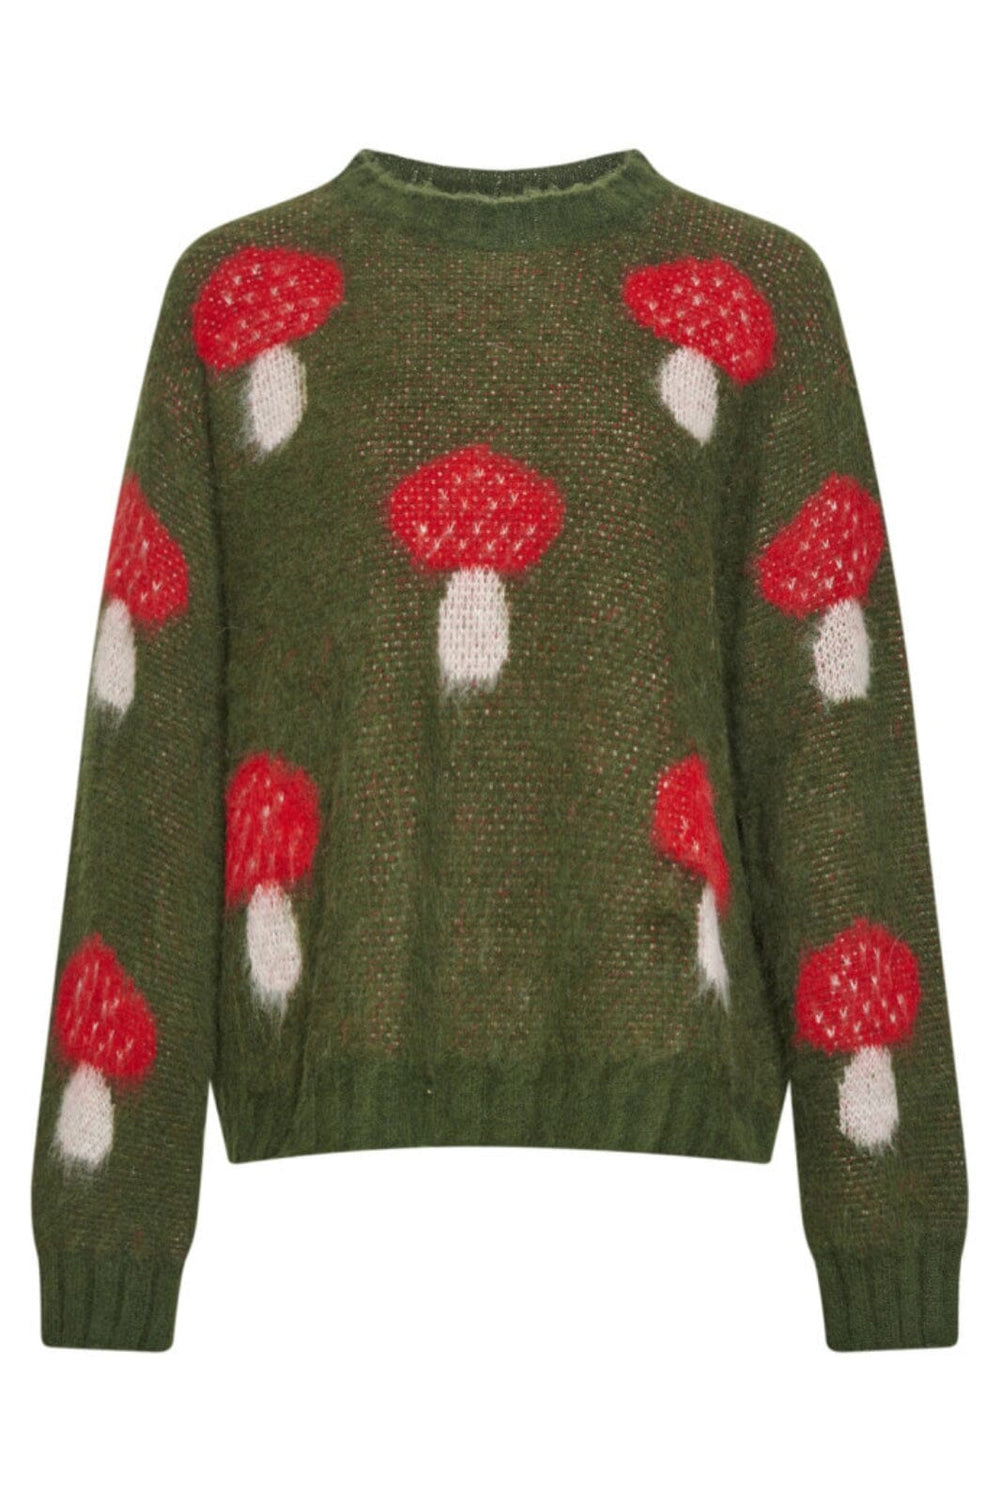 Noella - Lena Knit Sweater - 943 Mushroom Strikbluser 